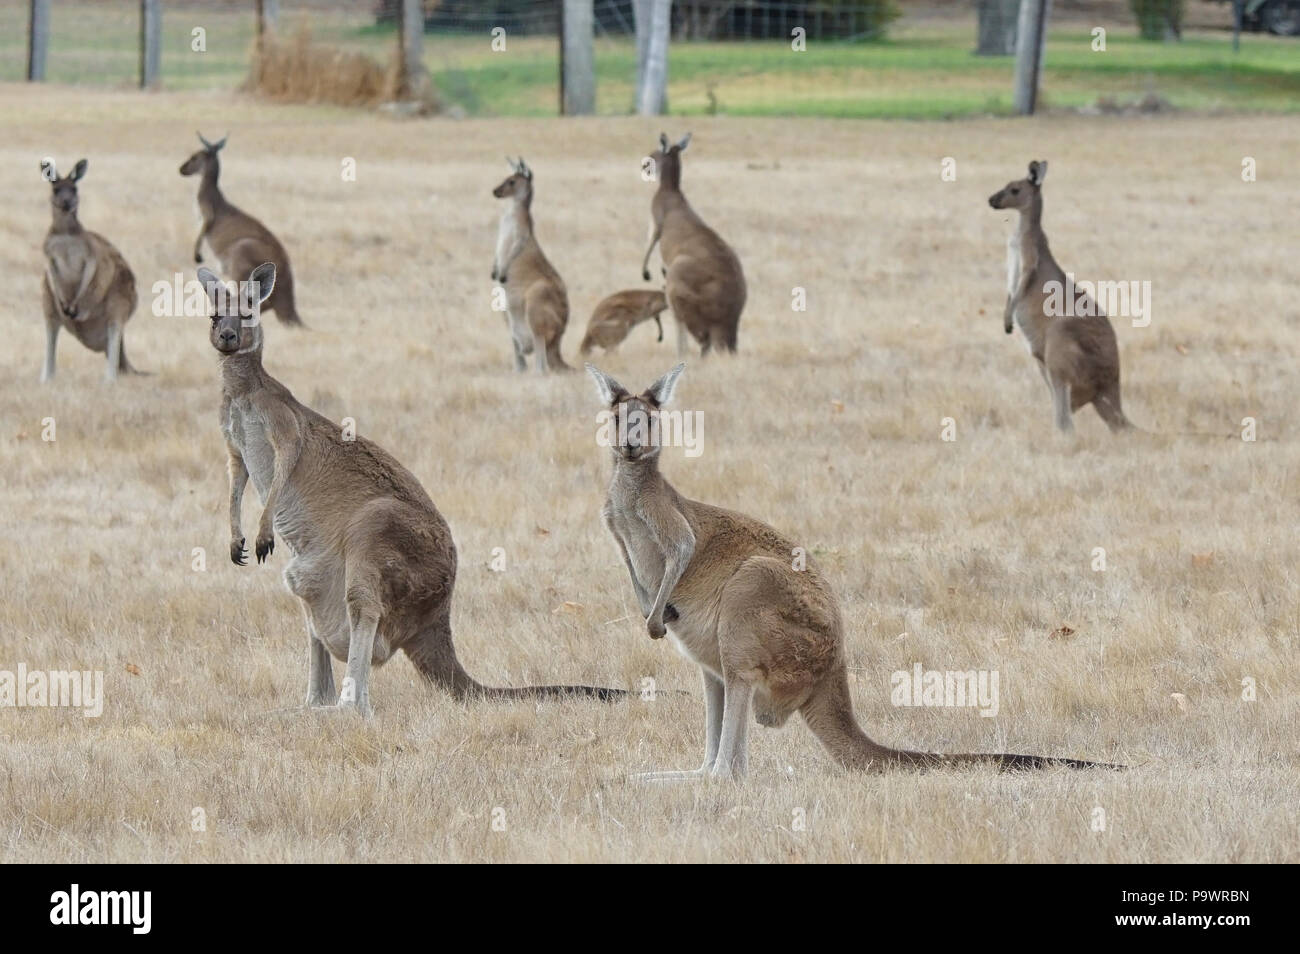 Western grey Kangaroo, Macropus fuliginosus, Foto in Westaustralien genommen wurde Stockfoto